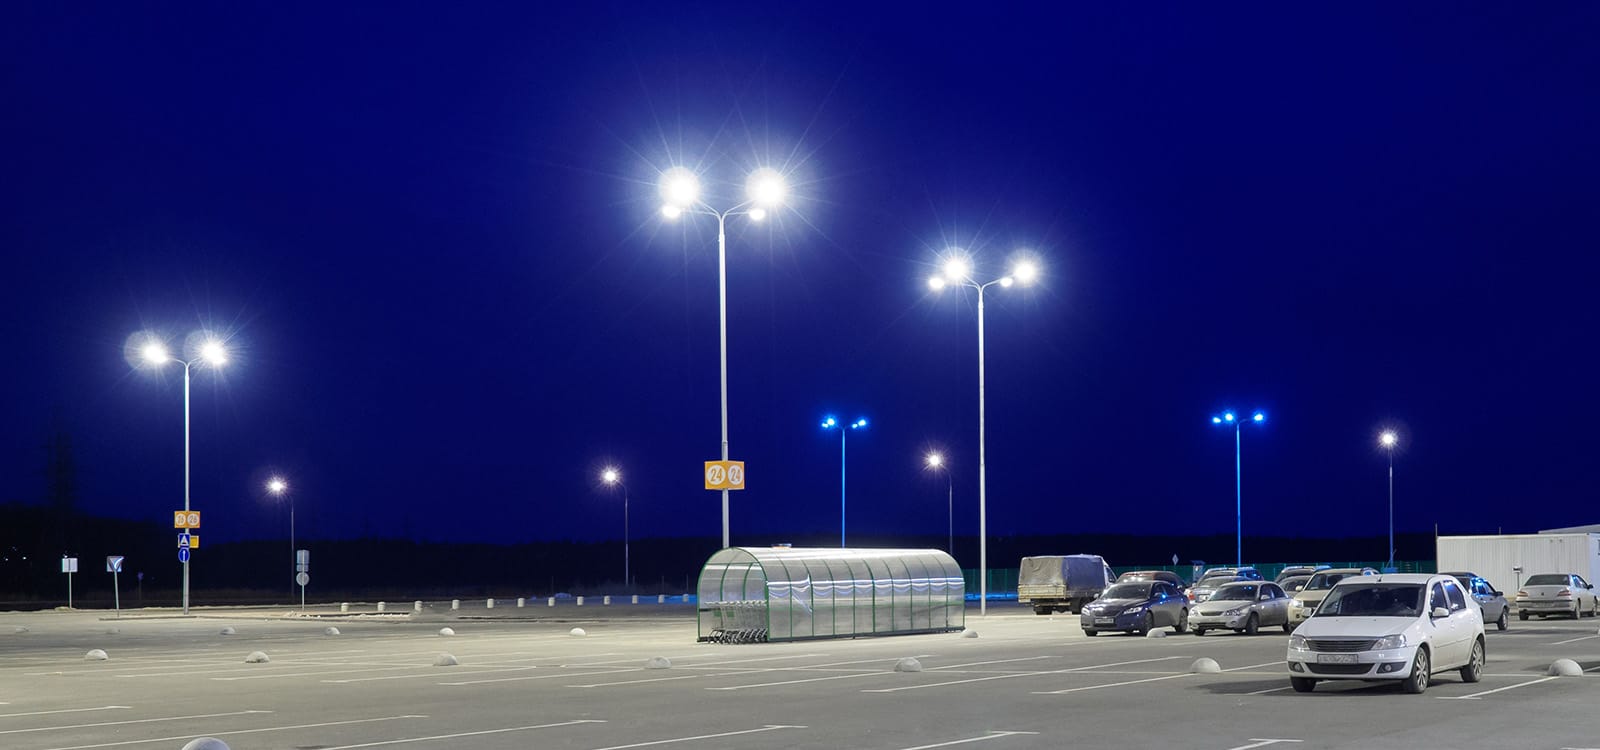 led parking lot light